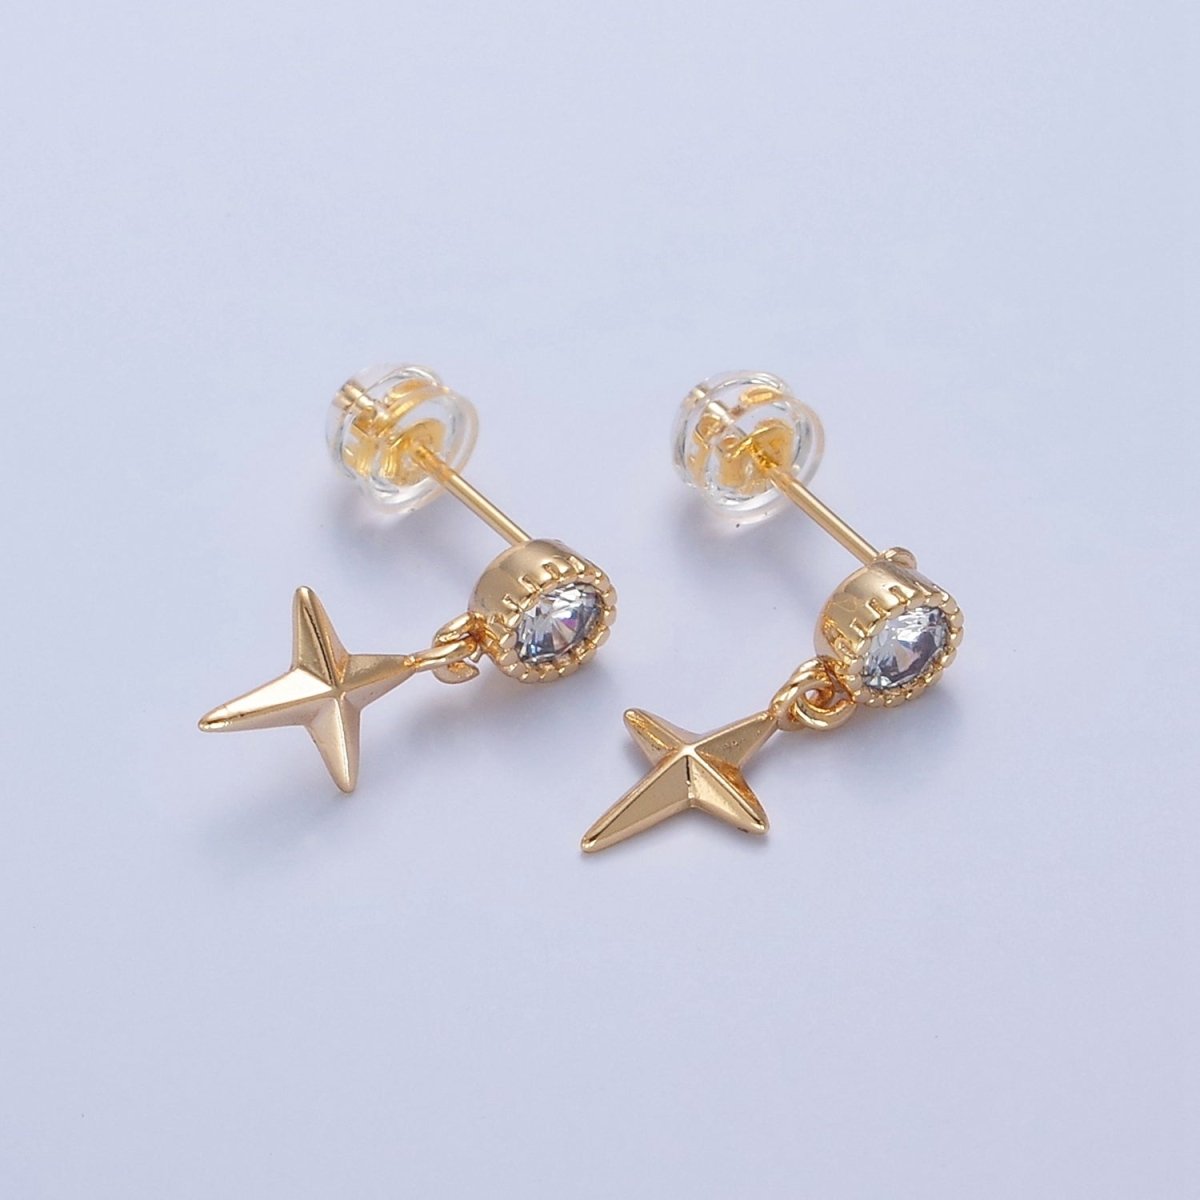 Mini Gold North Star Stud Earring Dangle Celestial Jewelry T-470 - DLUXCA